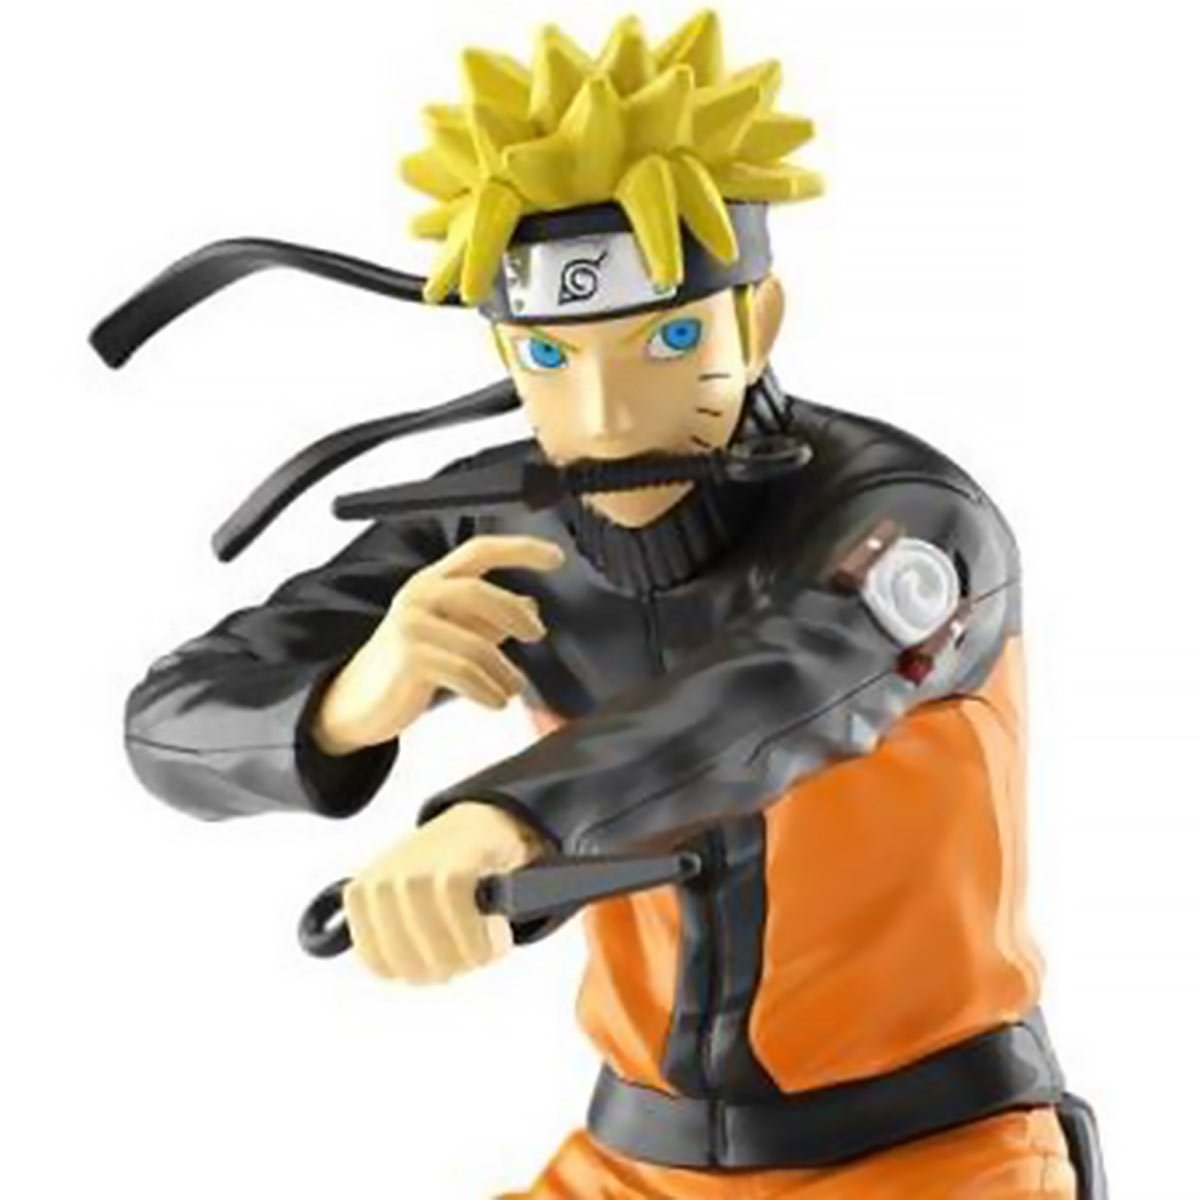 Bandai Hobby Gunpla Entry Grade Model Kit: Naruto Shippuden - Naruto Uzumaki